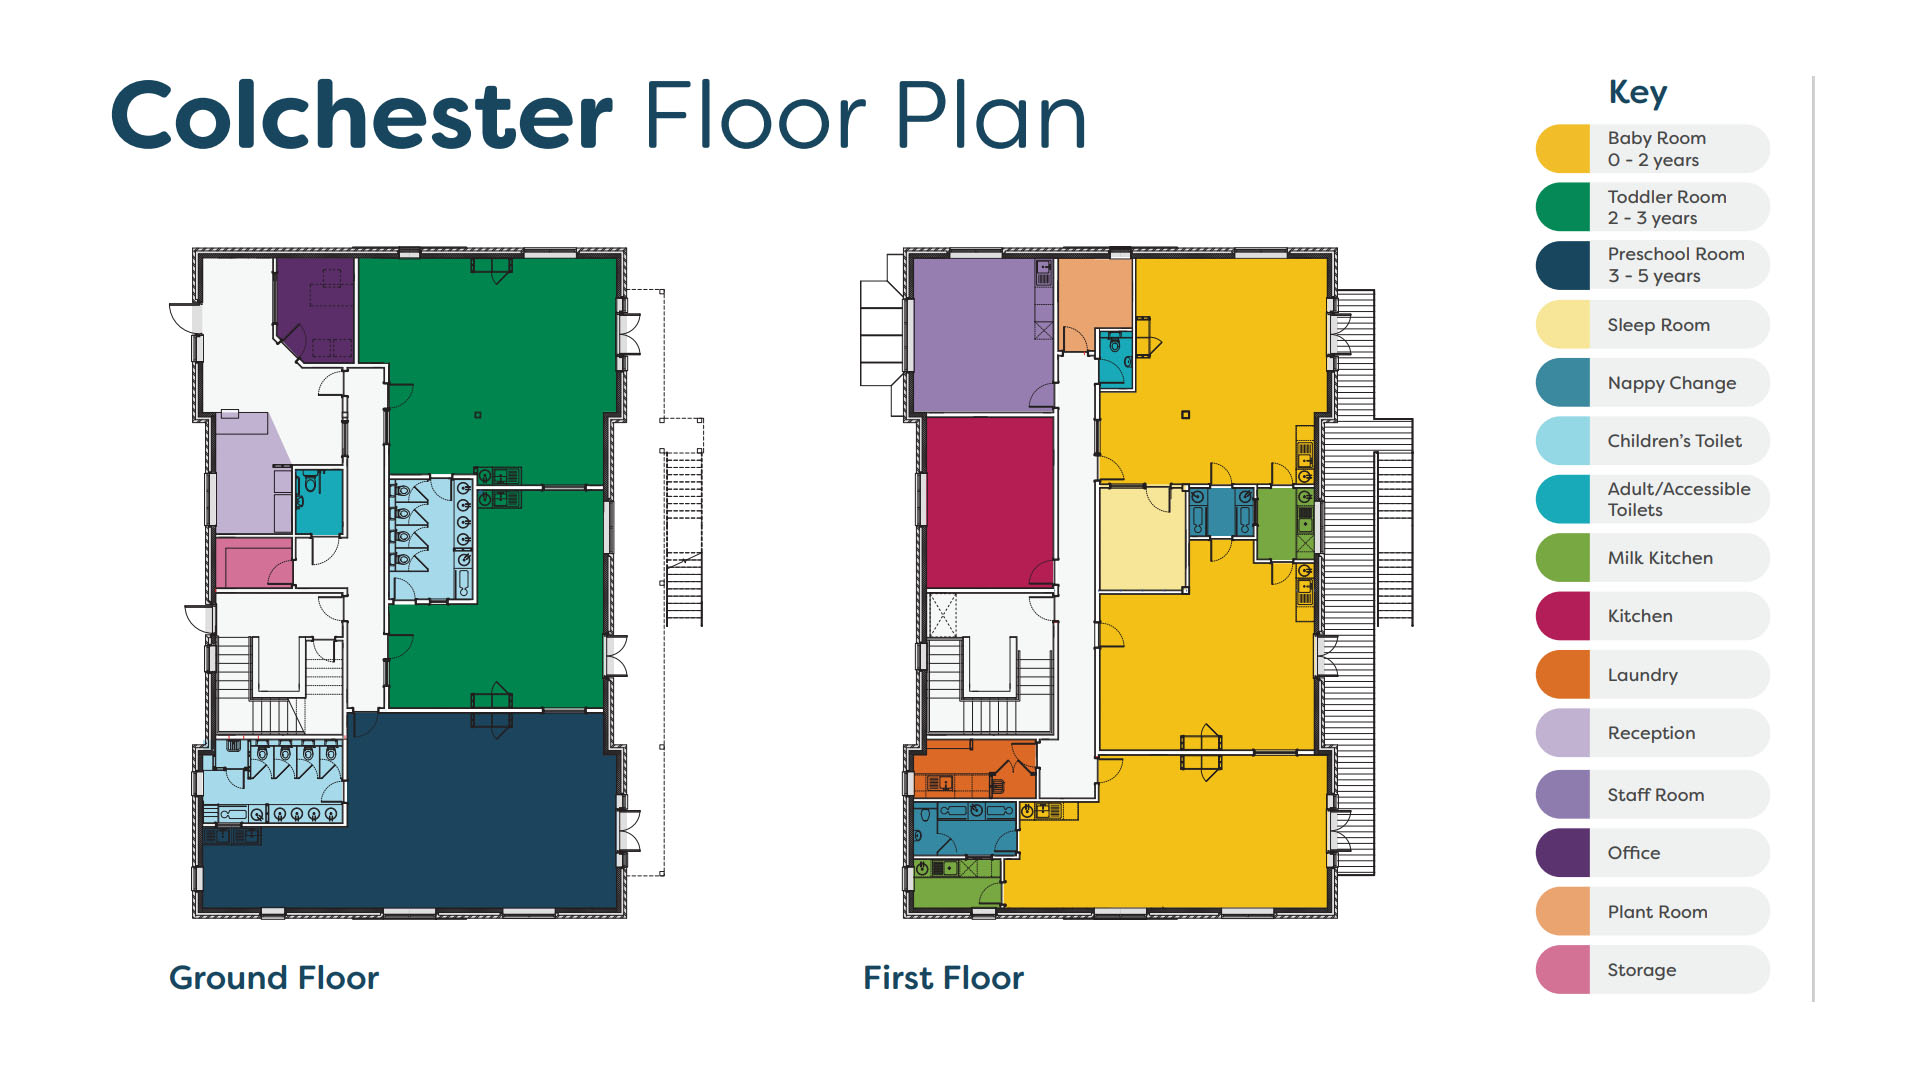 Colchester floor plan